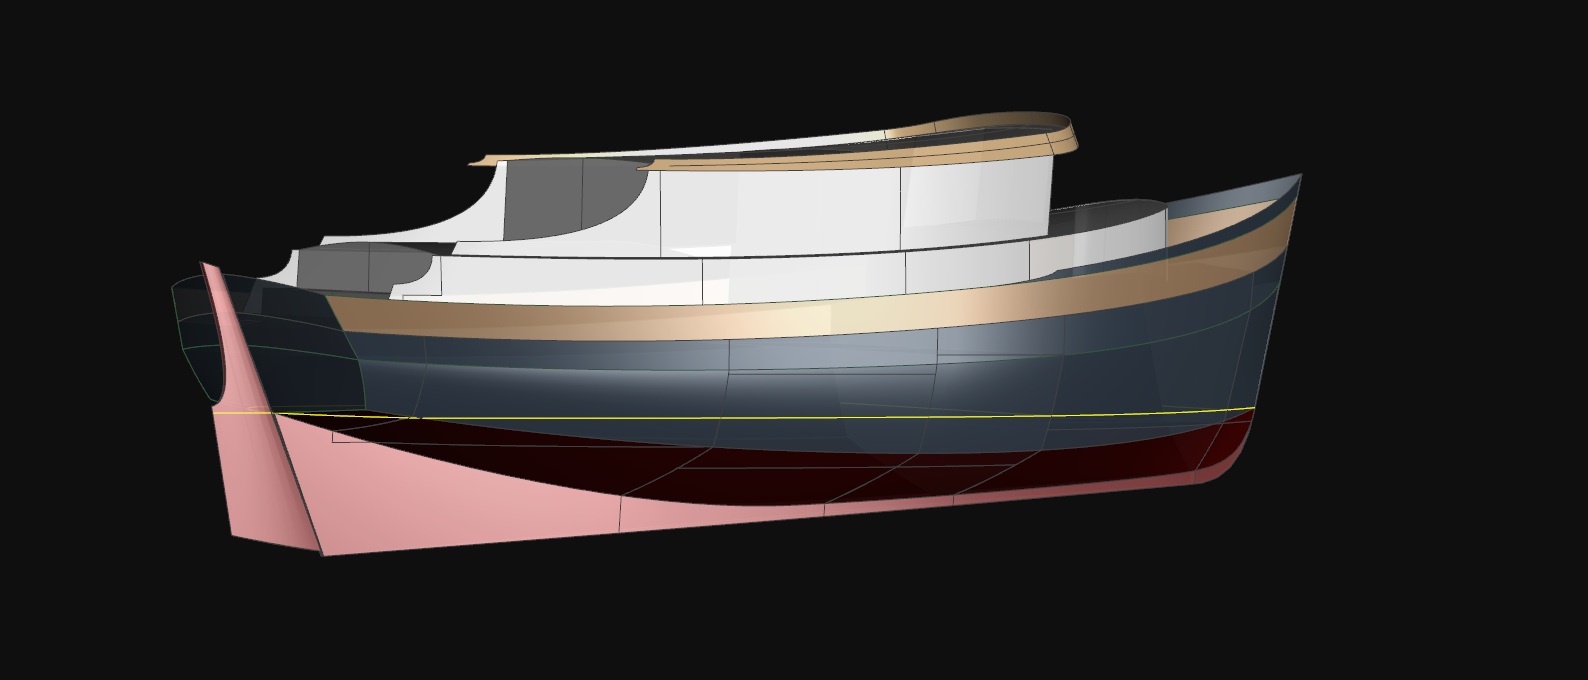 The 49' Trawler Yacht - BLACK JACK - Kasten Marine Design, Inc.